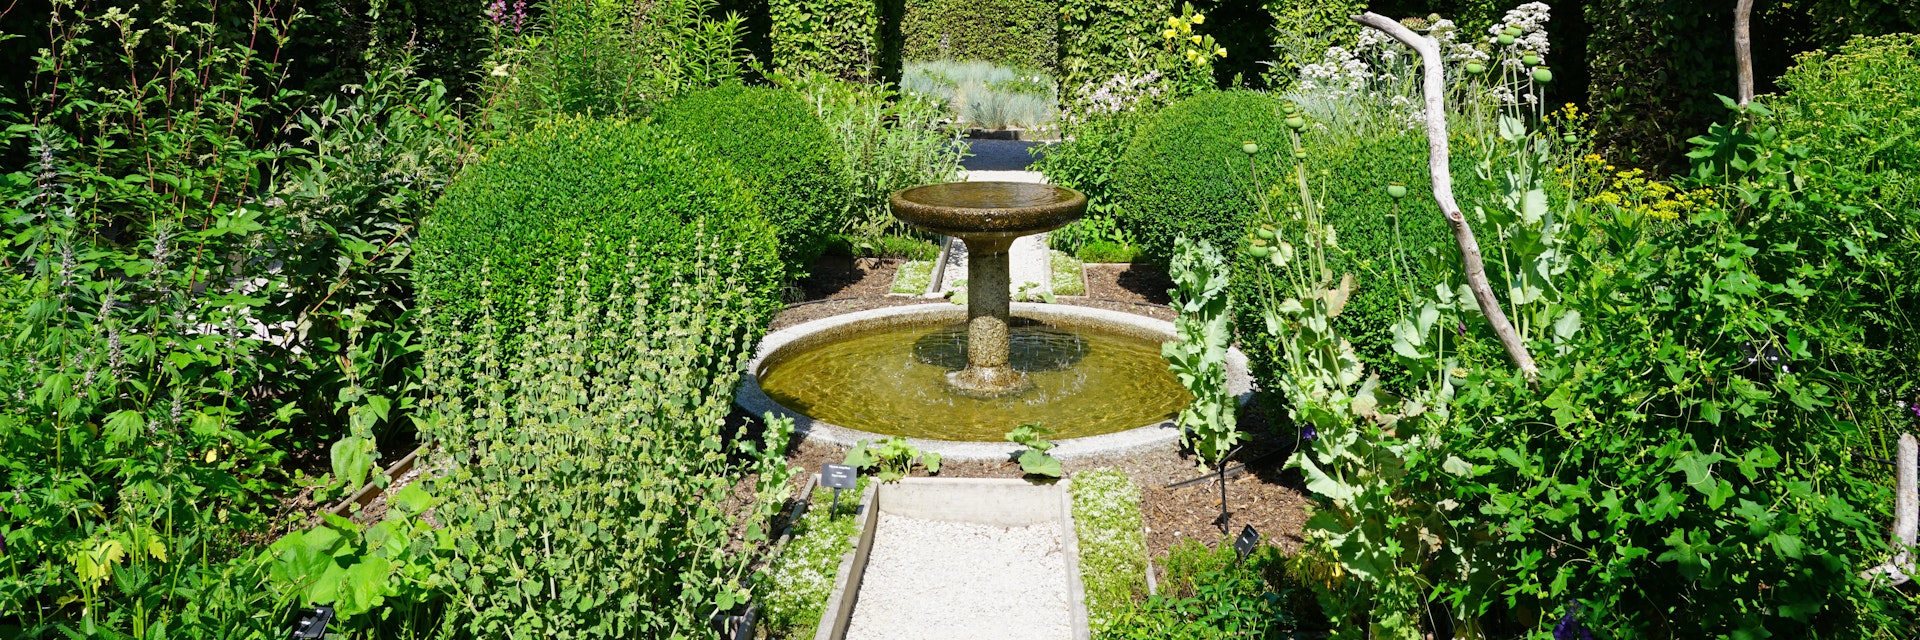 The Jardin des Cinq Sens (Five senses garden) in the medieval village of Yvoire, France.